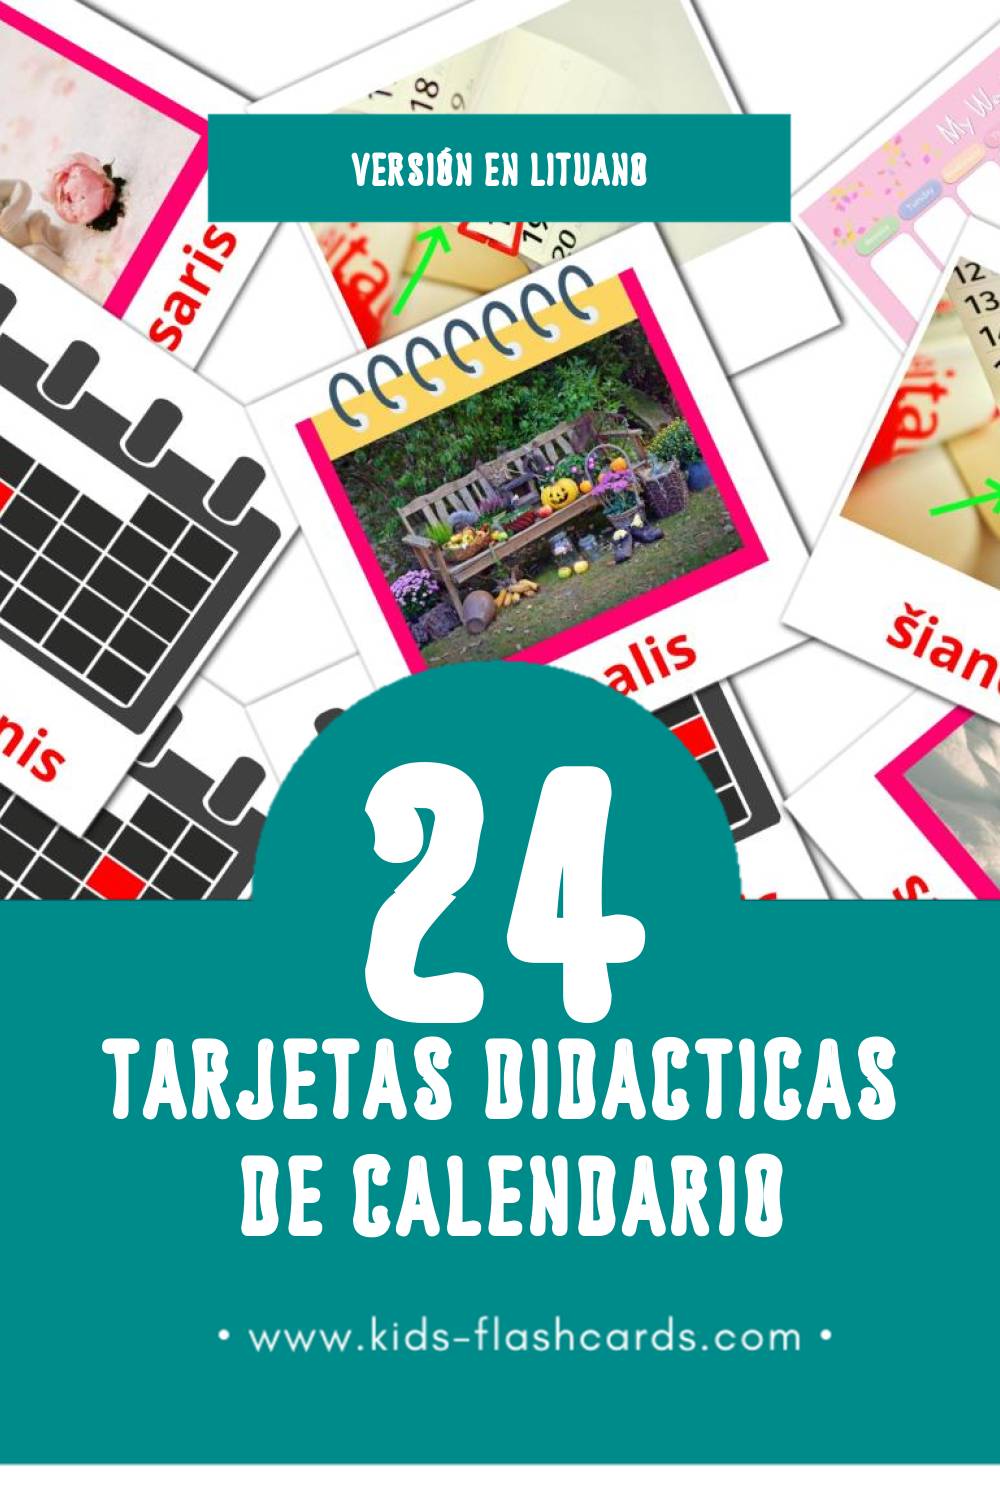 Tarjetas visuales de Kalendorius para niños pequeños (24 tarjetas en Lituano)